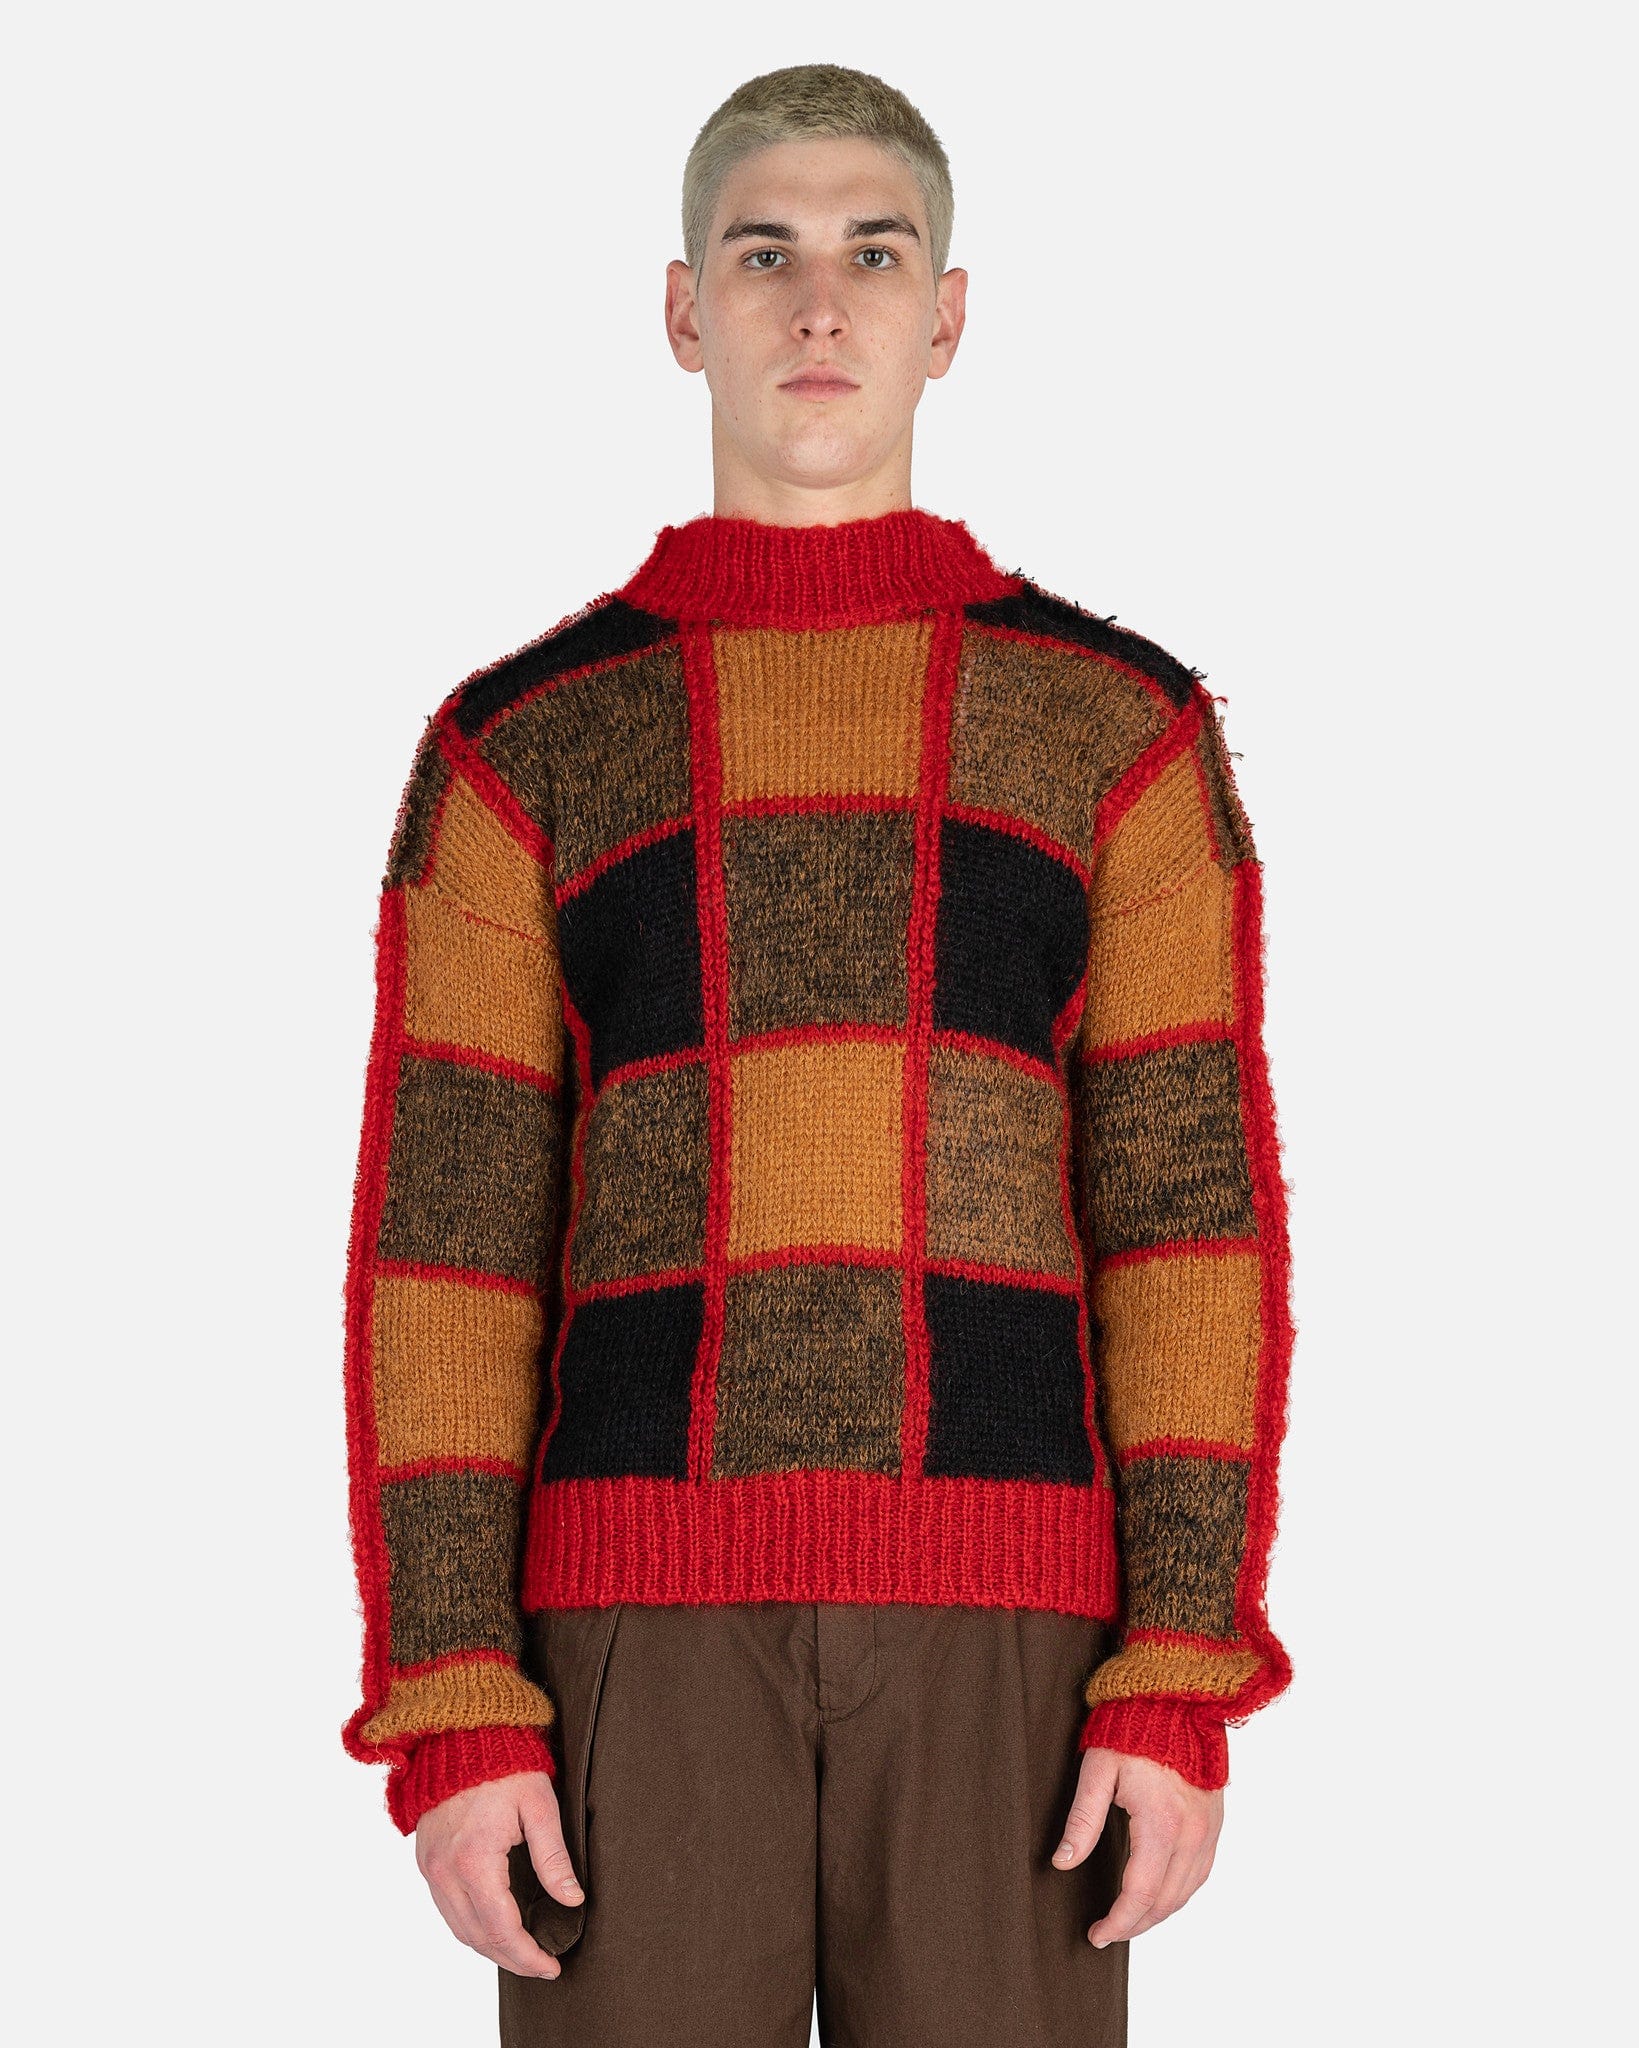 Marni Men's Sweatshirts Iconic Half & Half Check Sweater in Tulip